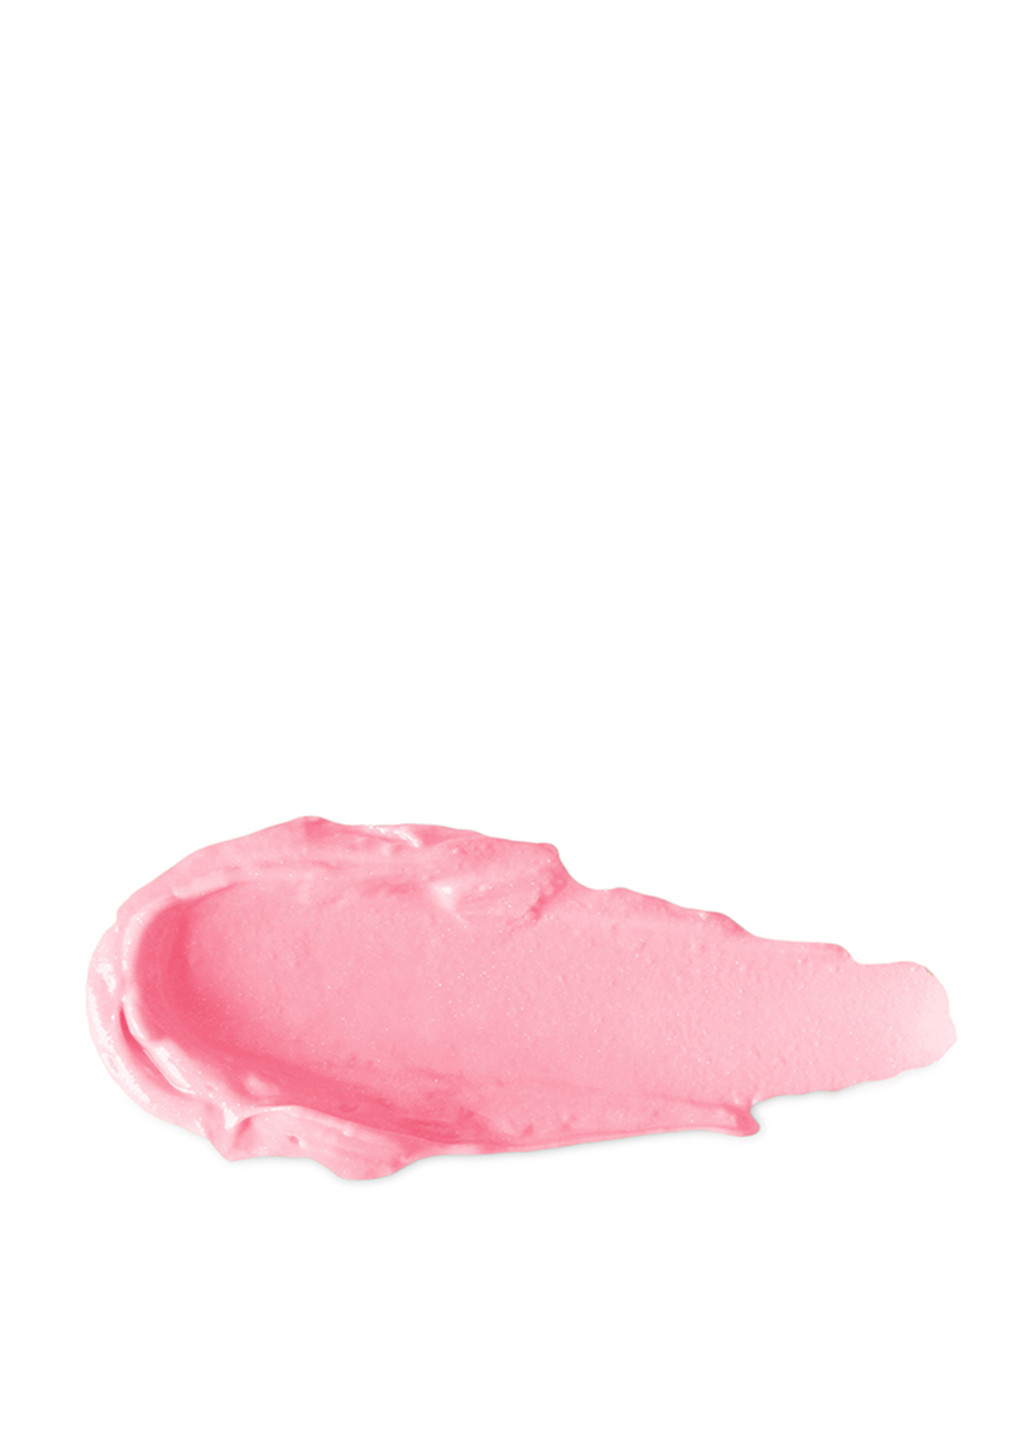 Бальзам для губ, 2,5 г Kiko светло-розовый